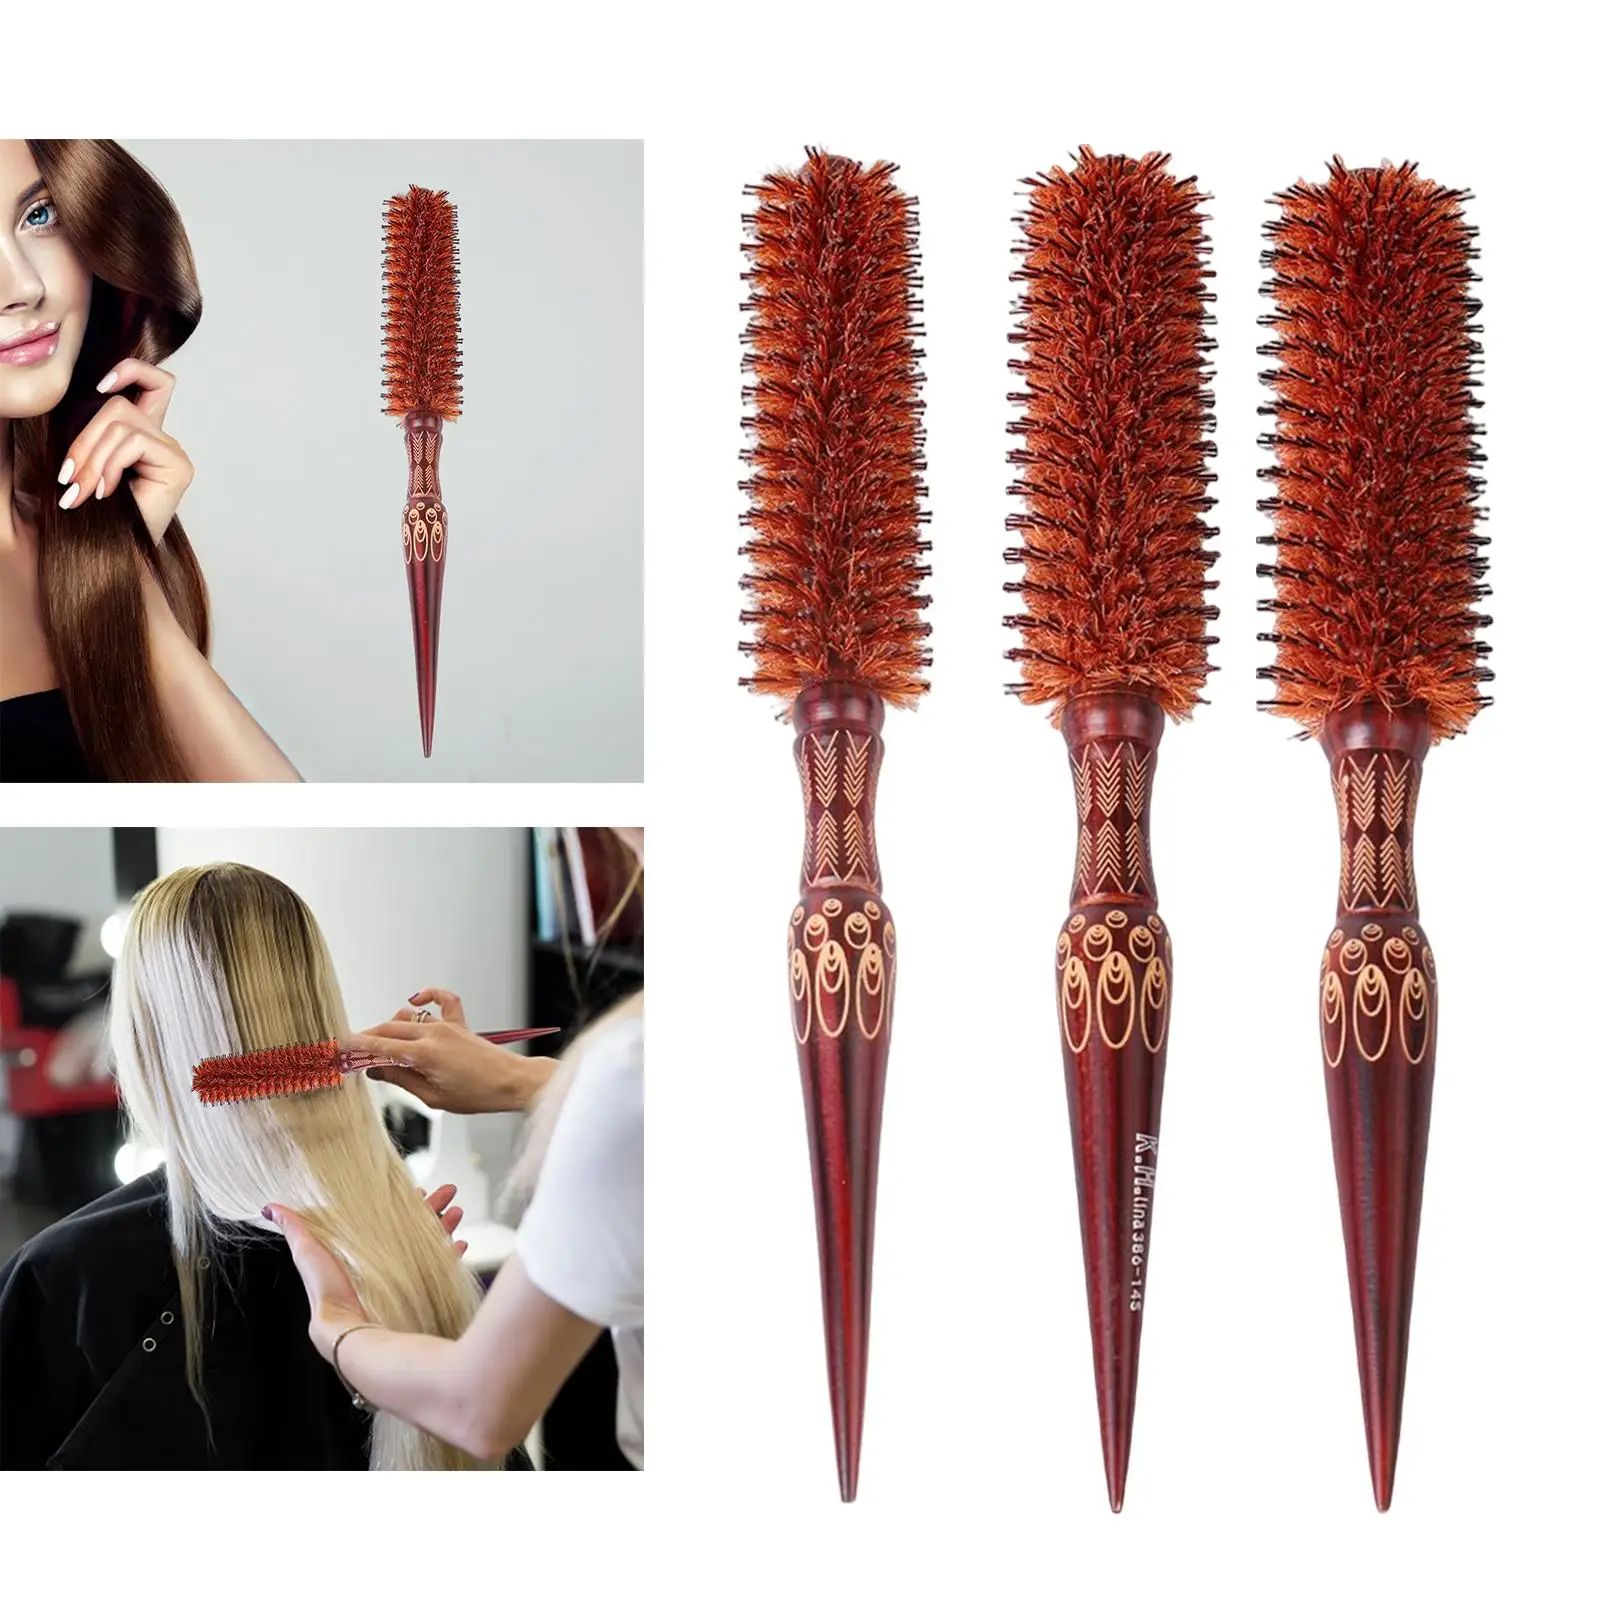 Bristle Round Hair Brush High Temperature Resistant Anti Static for Barber